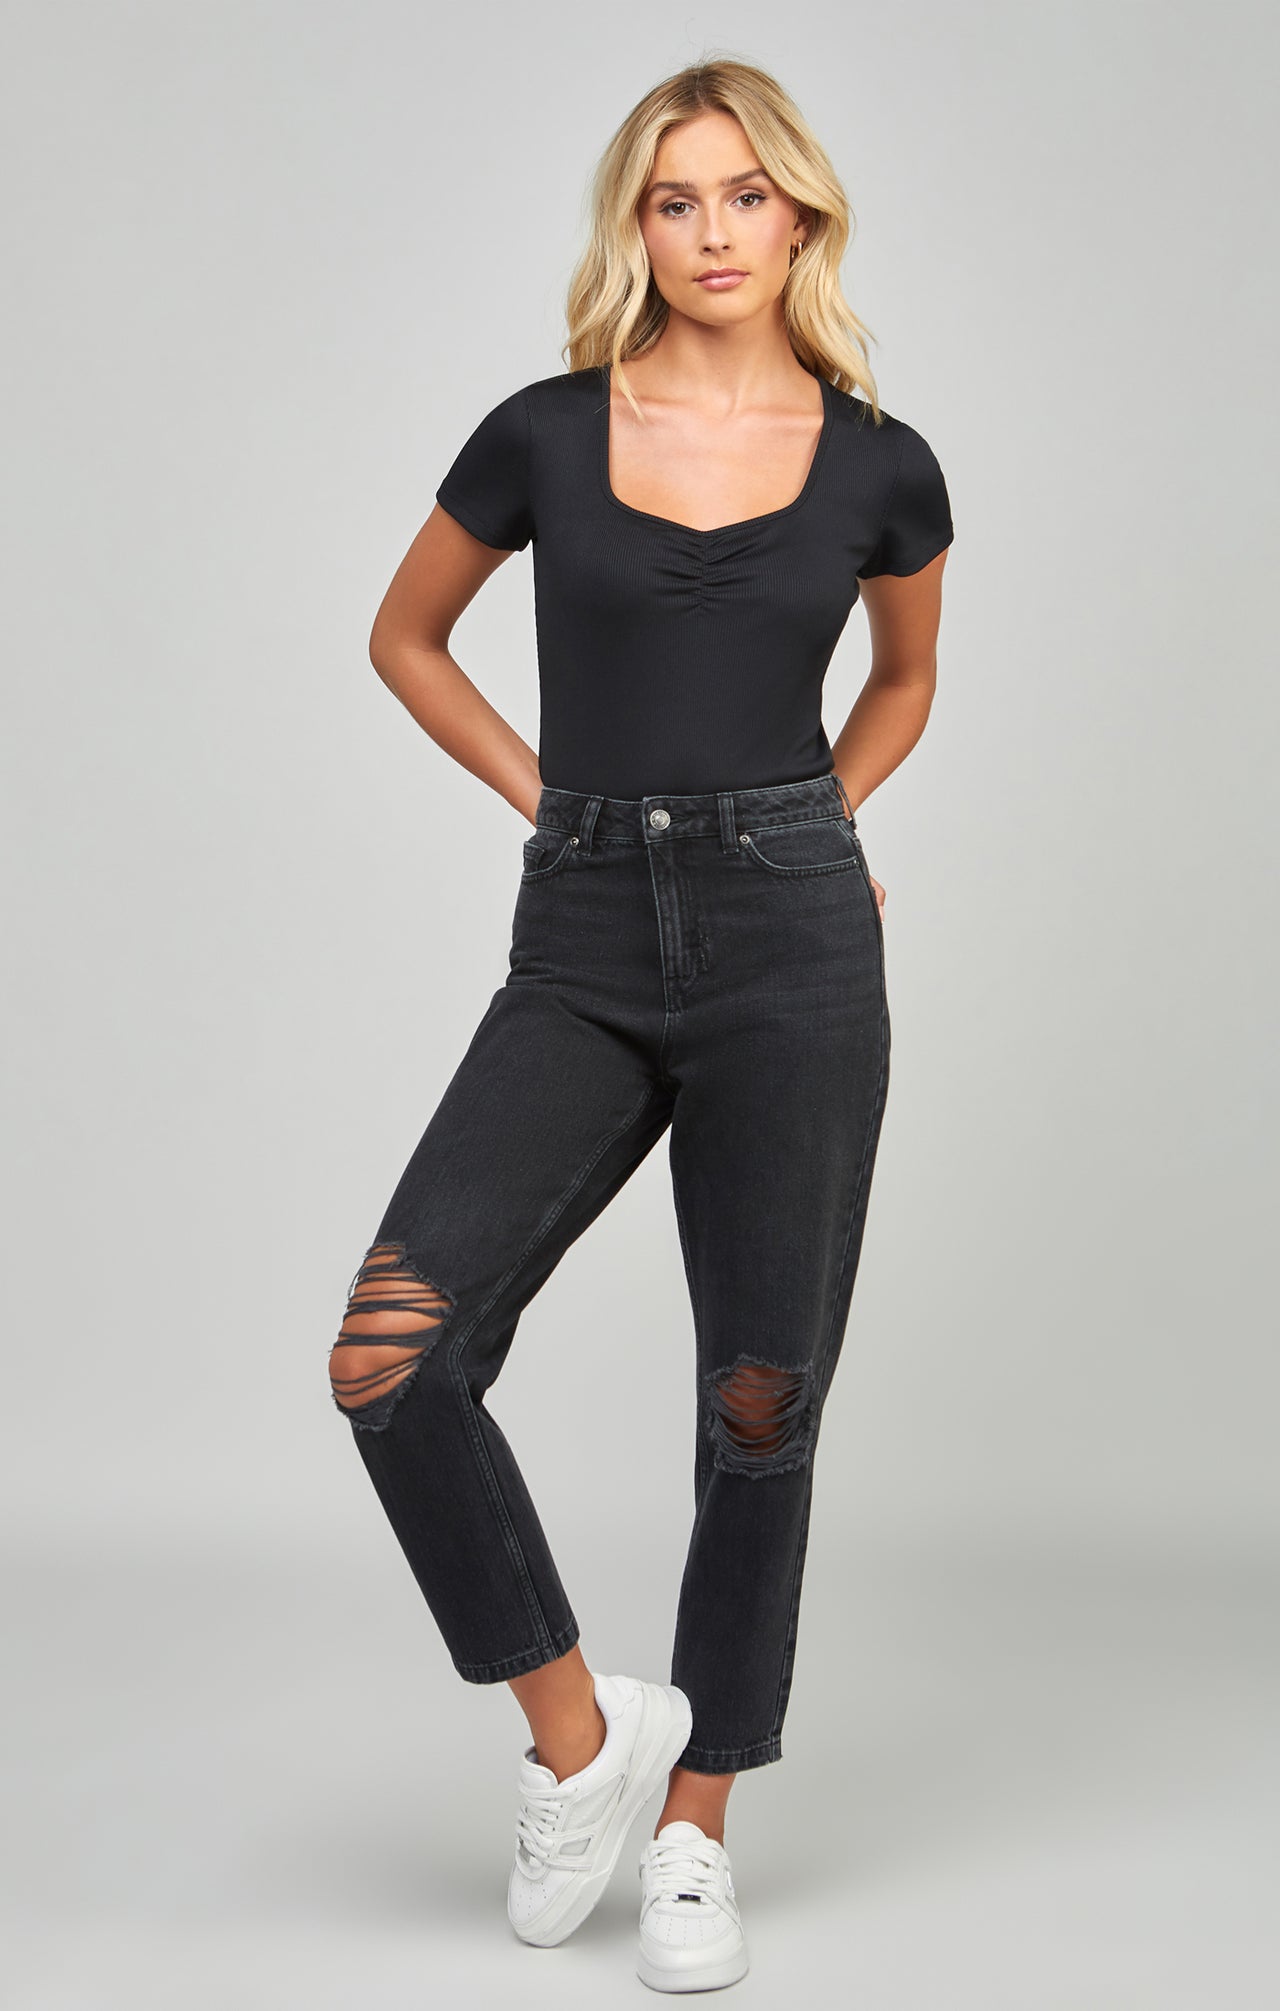 Black Short Sleeve Bodysuit (5)